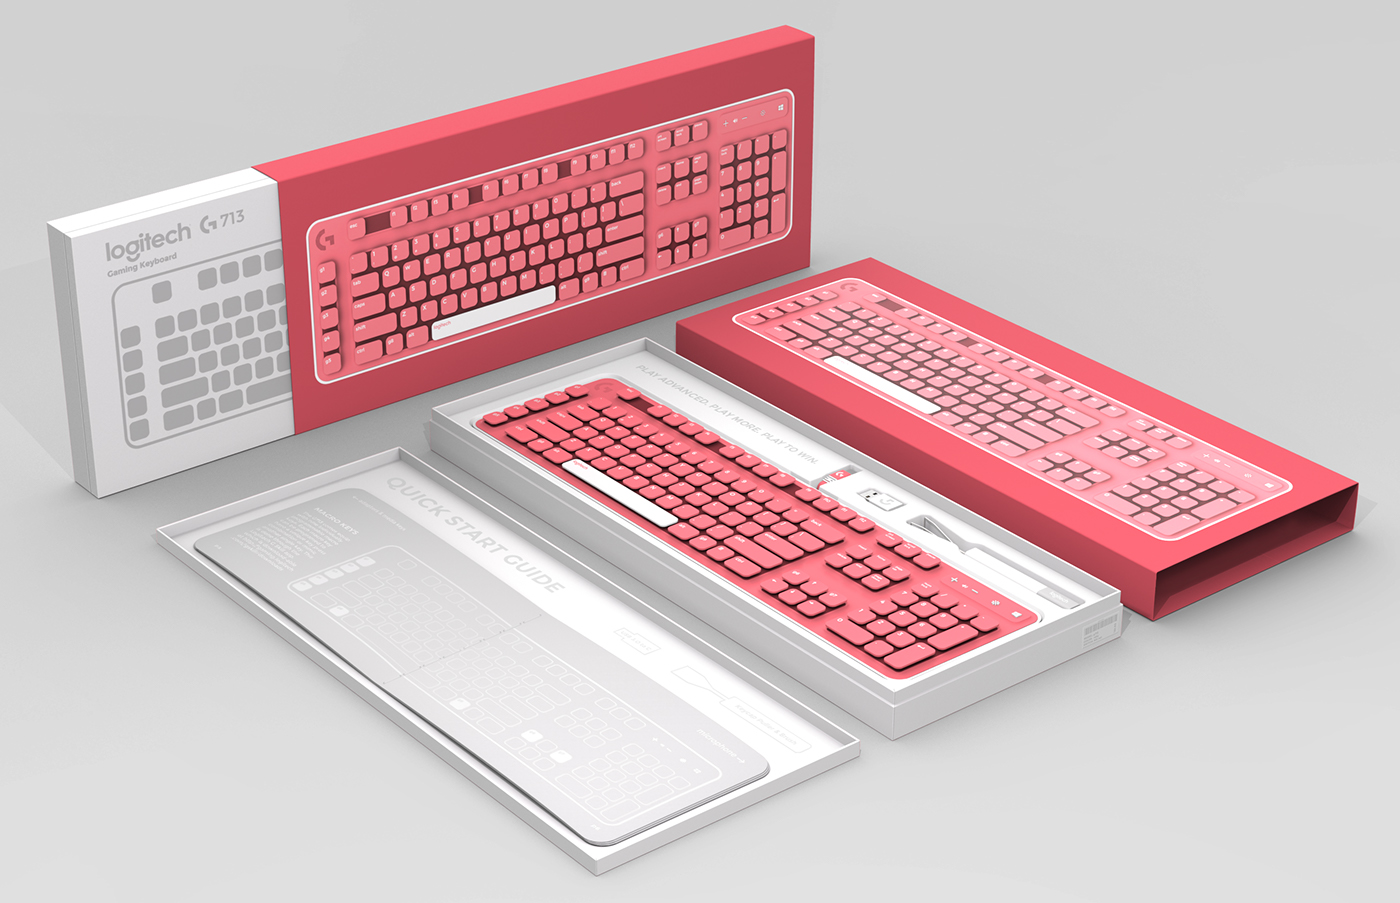 keyboard Logitech tech Gaming Packaging product Computer Electronics